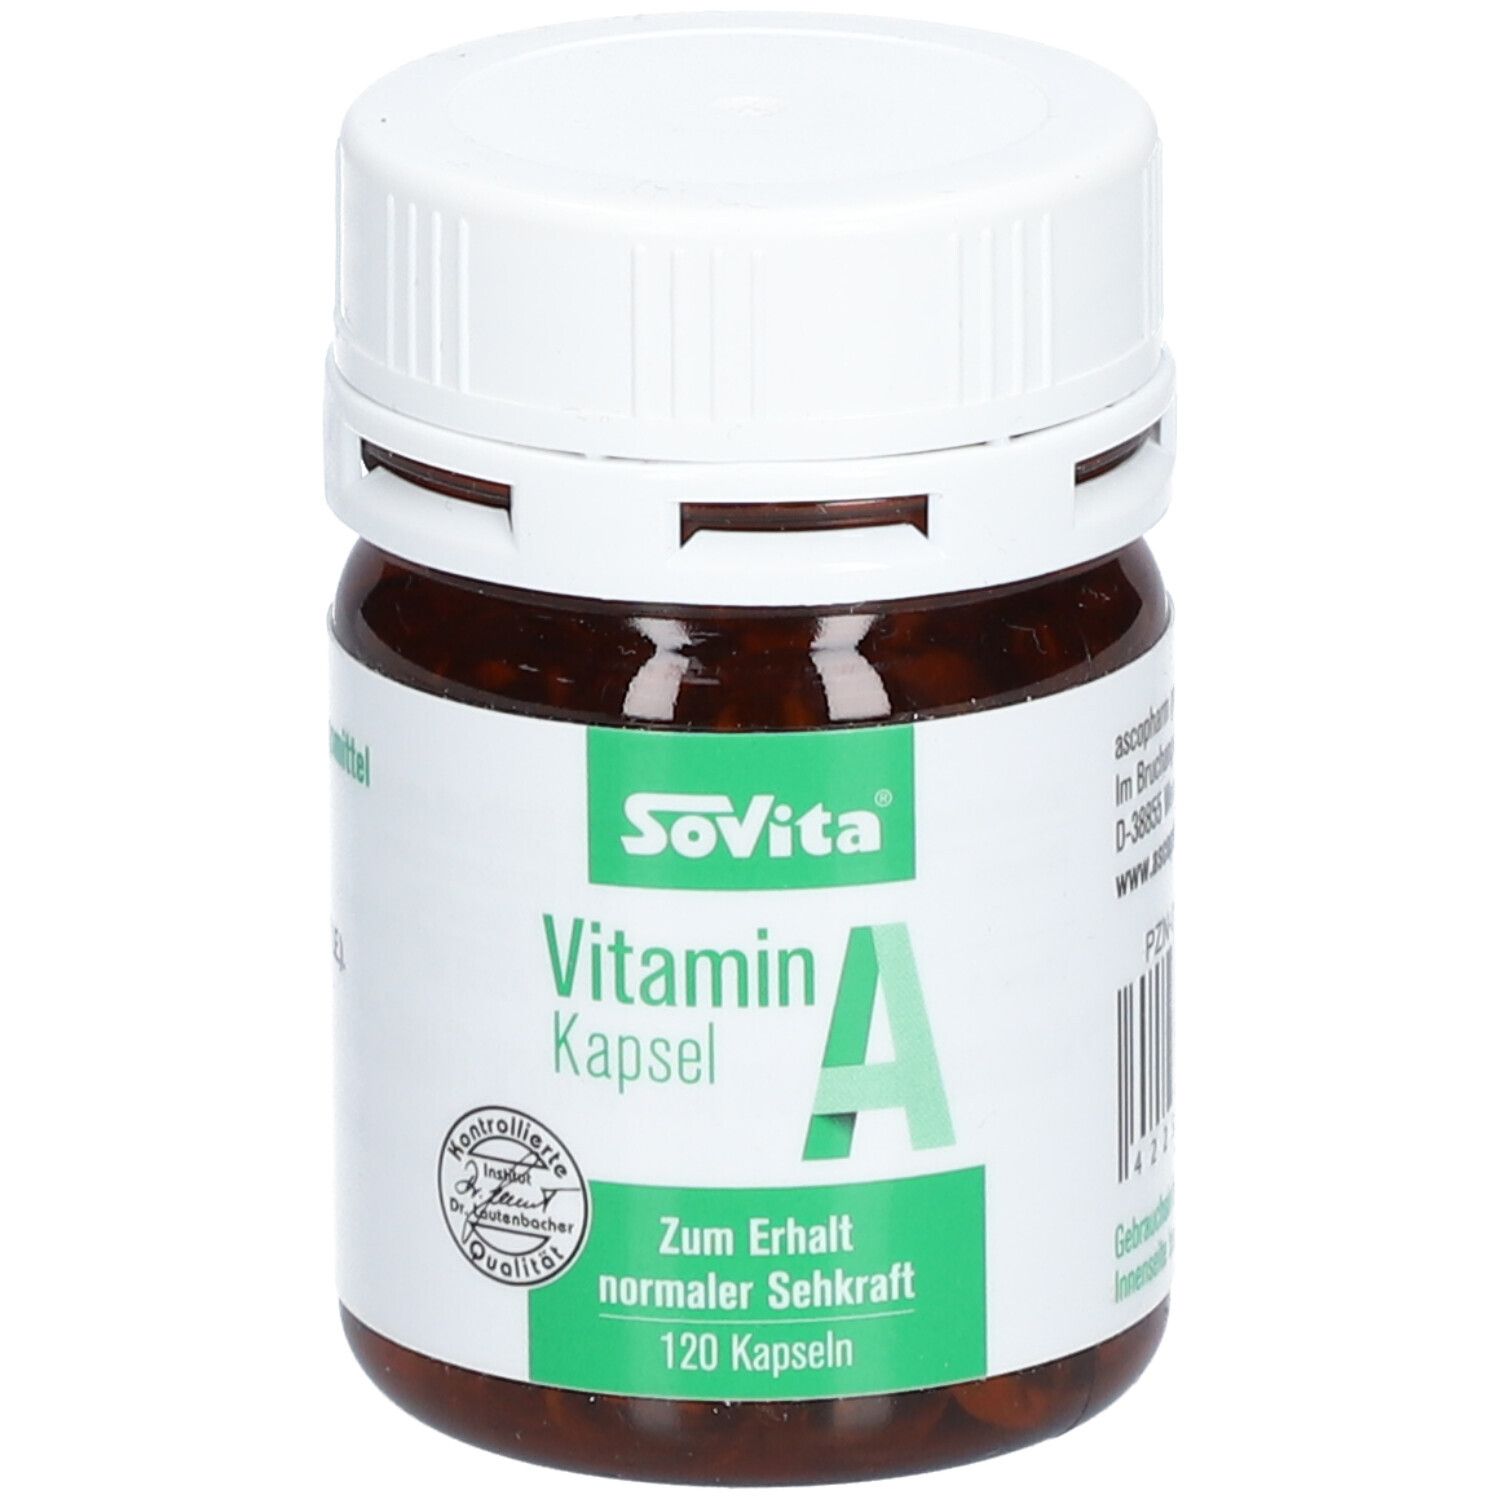 SoVita® Vitamin A